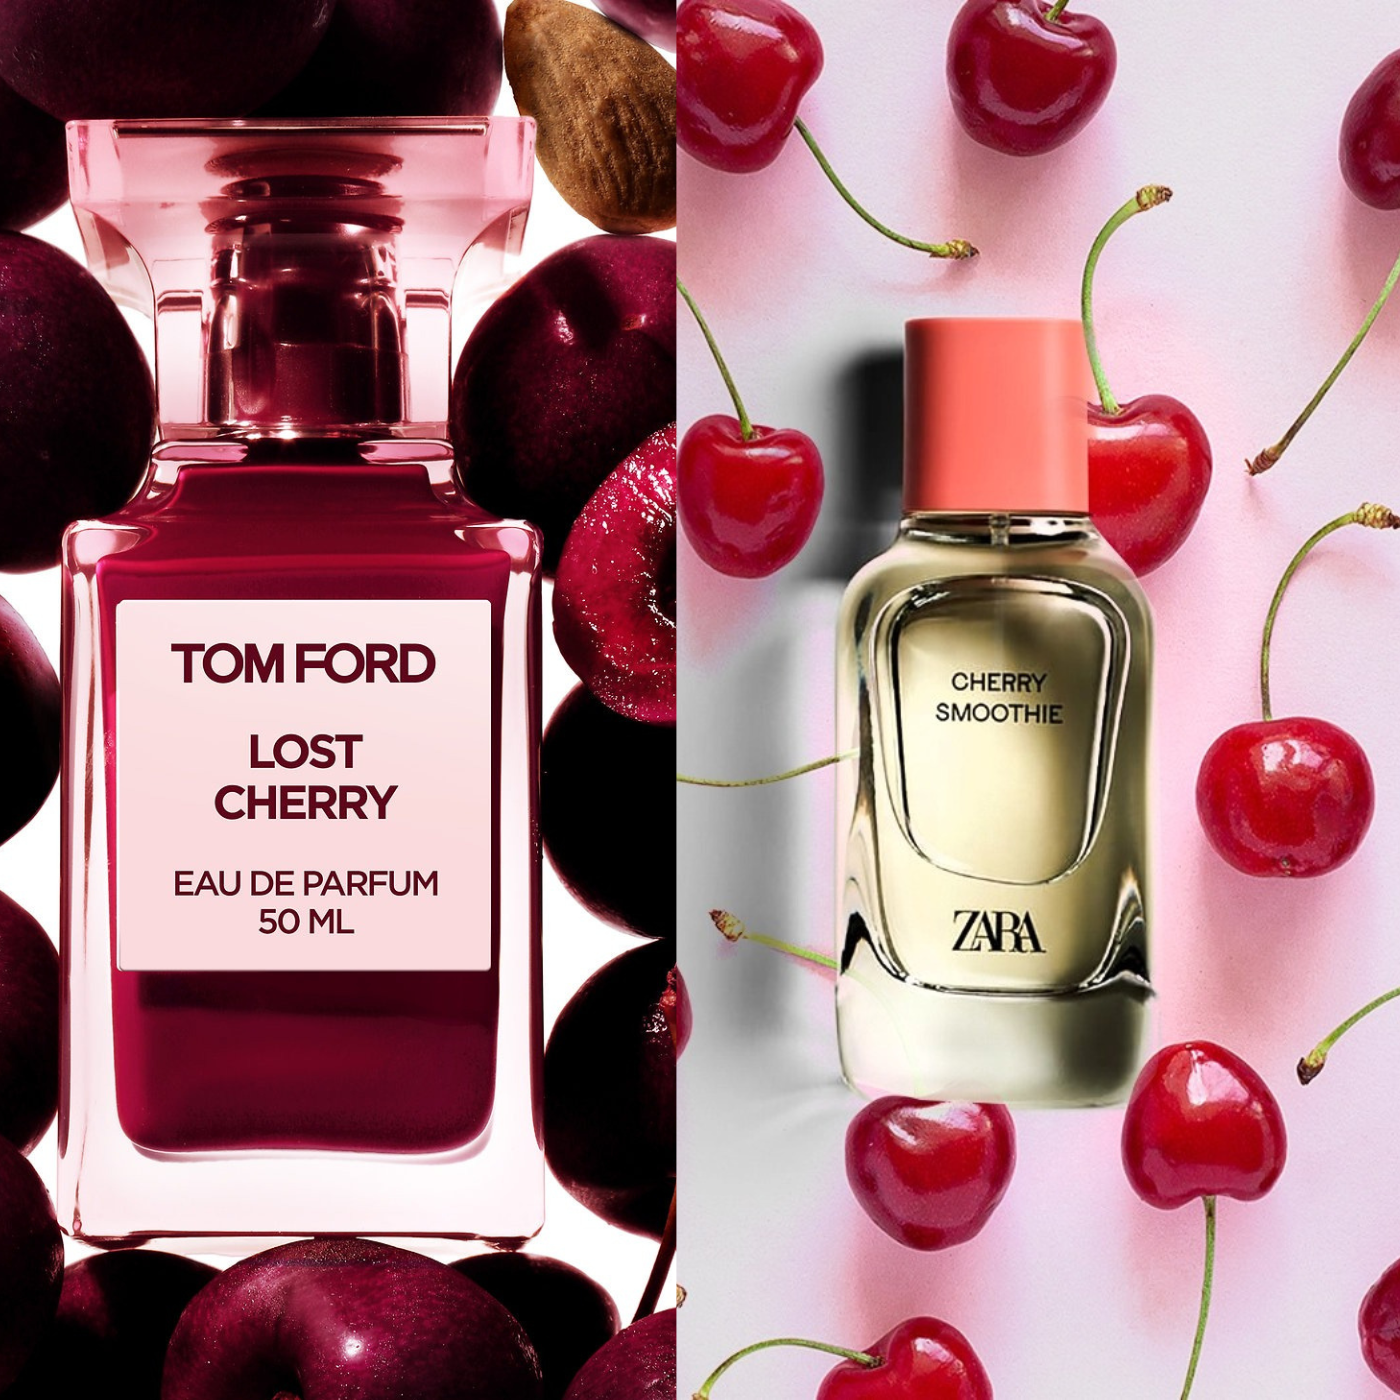 Perfume dupes are in the spotlight • TrendAroma Marketing